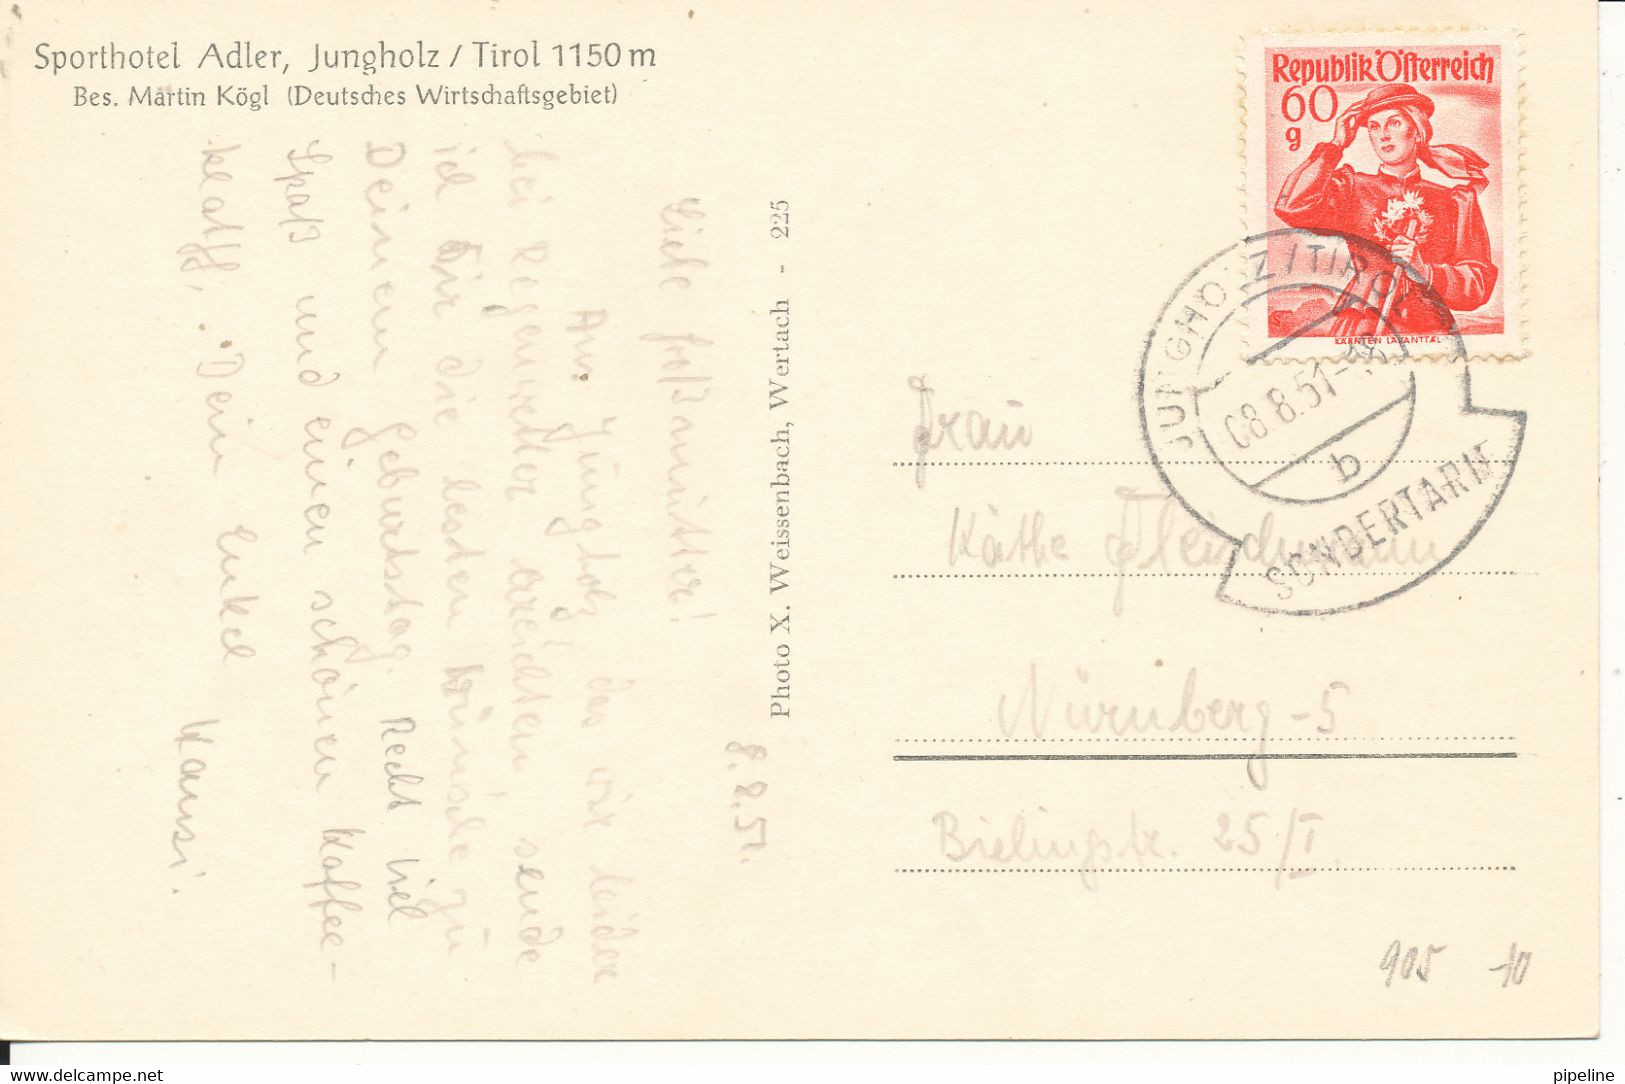 Austria Postcard Sent To Germany 8-8-1951 (Jungholz) With Special Posrmark SONDERTARIF - Jungholz